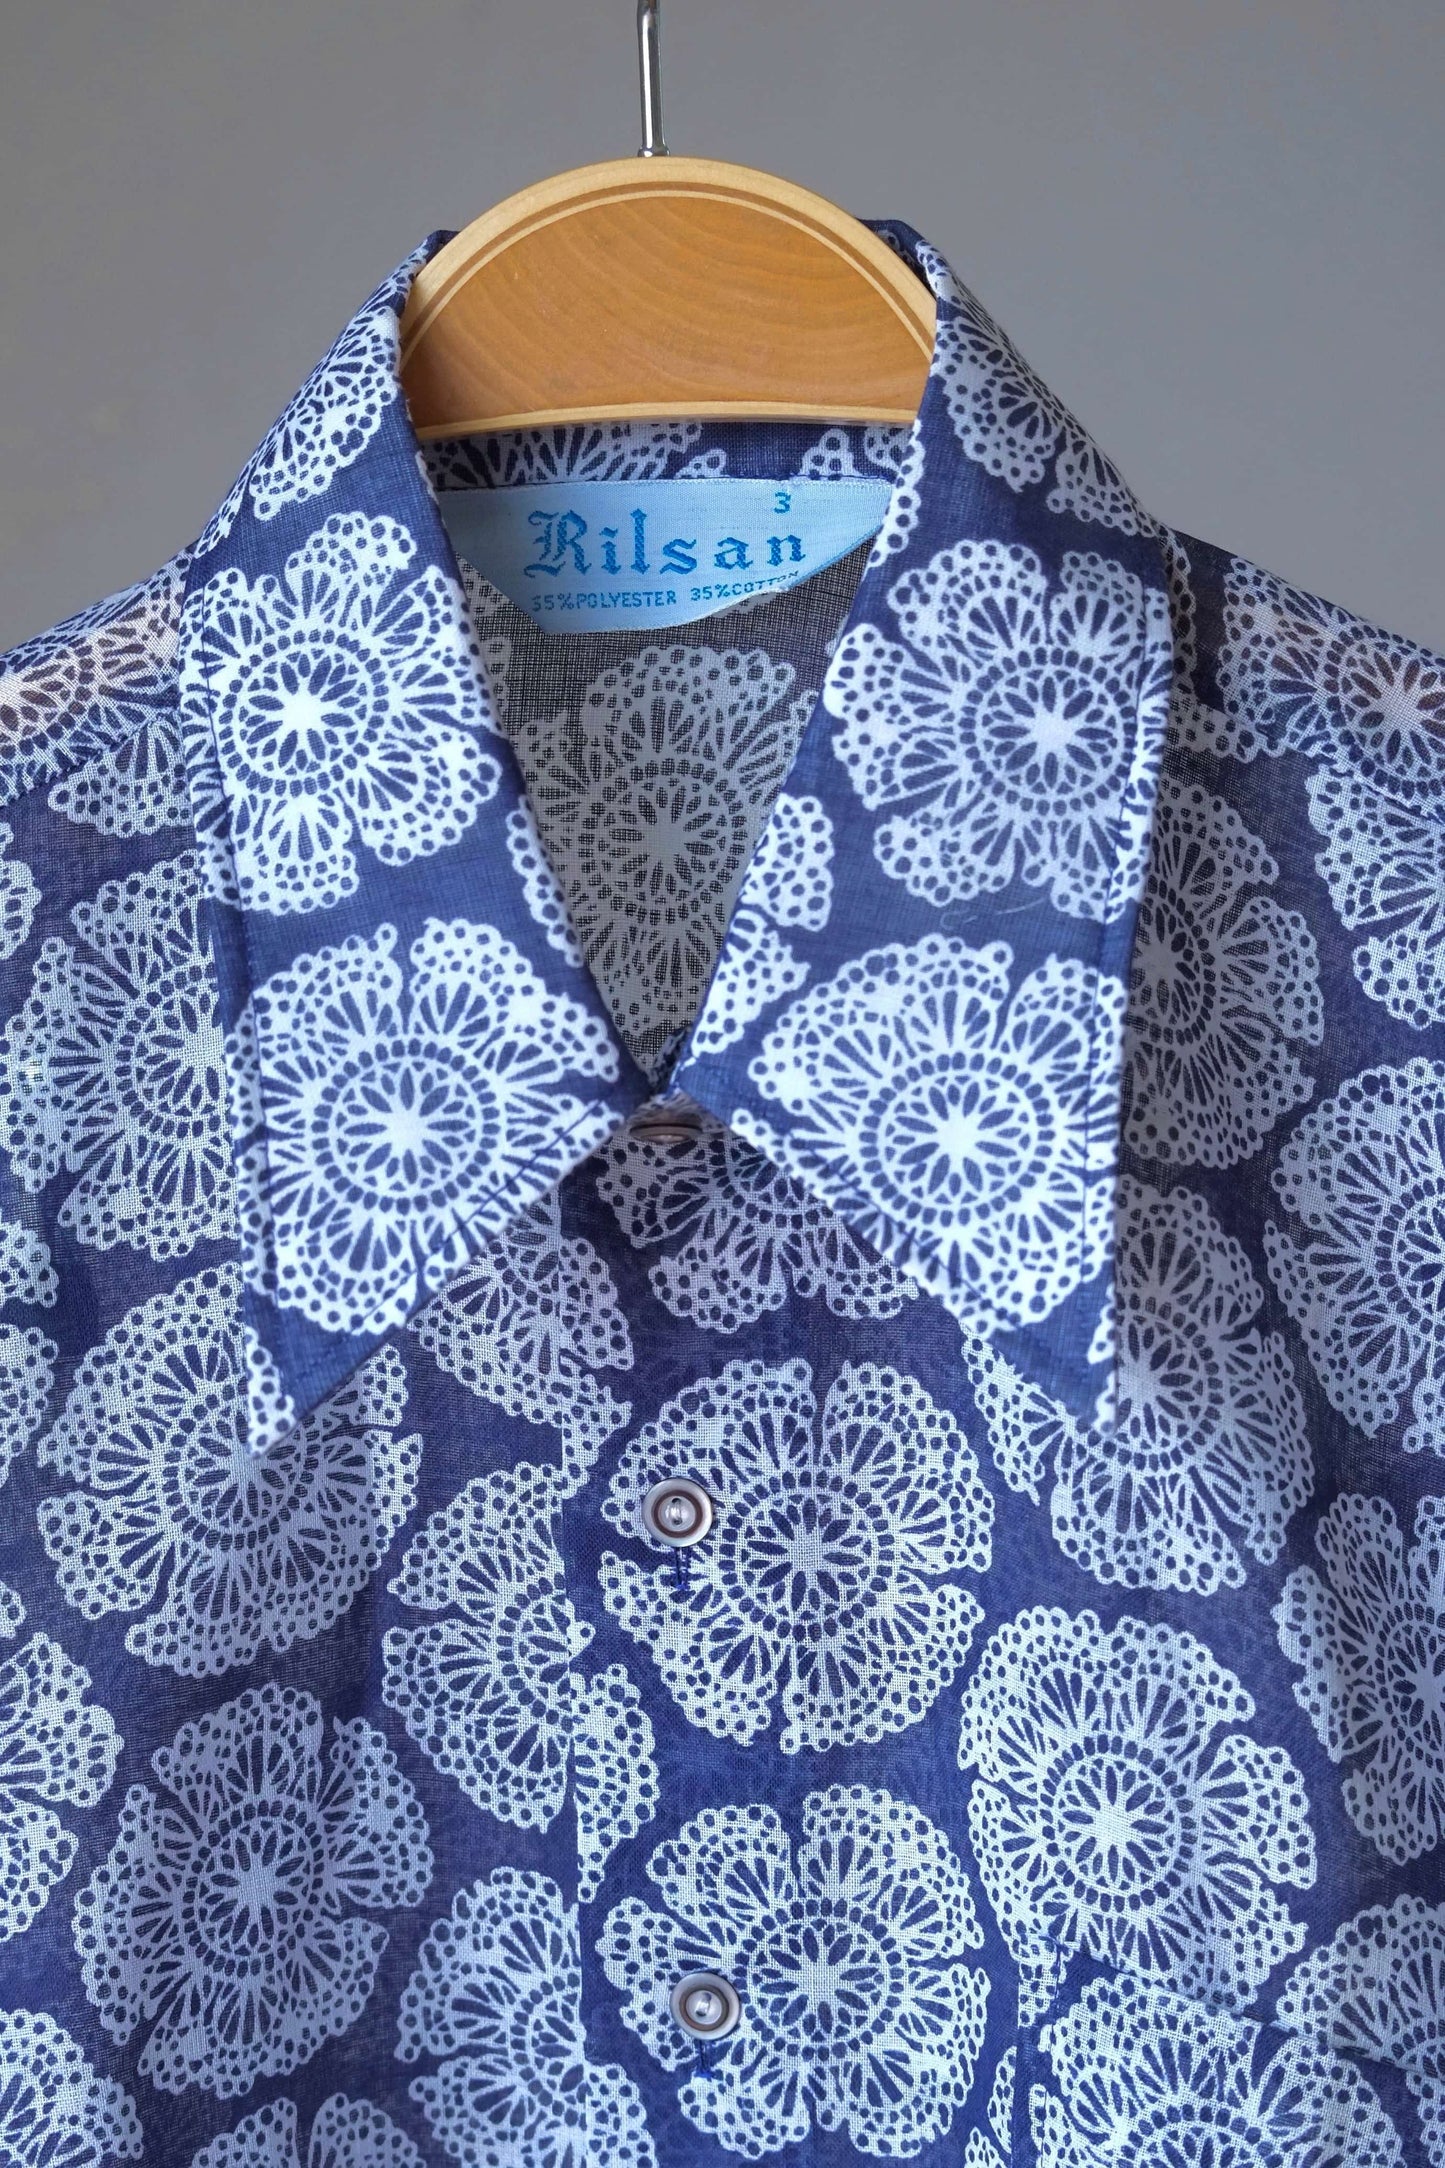 vintage flower print long sleeves 70s shirt close up